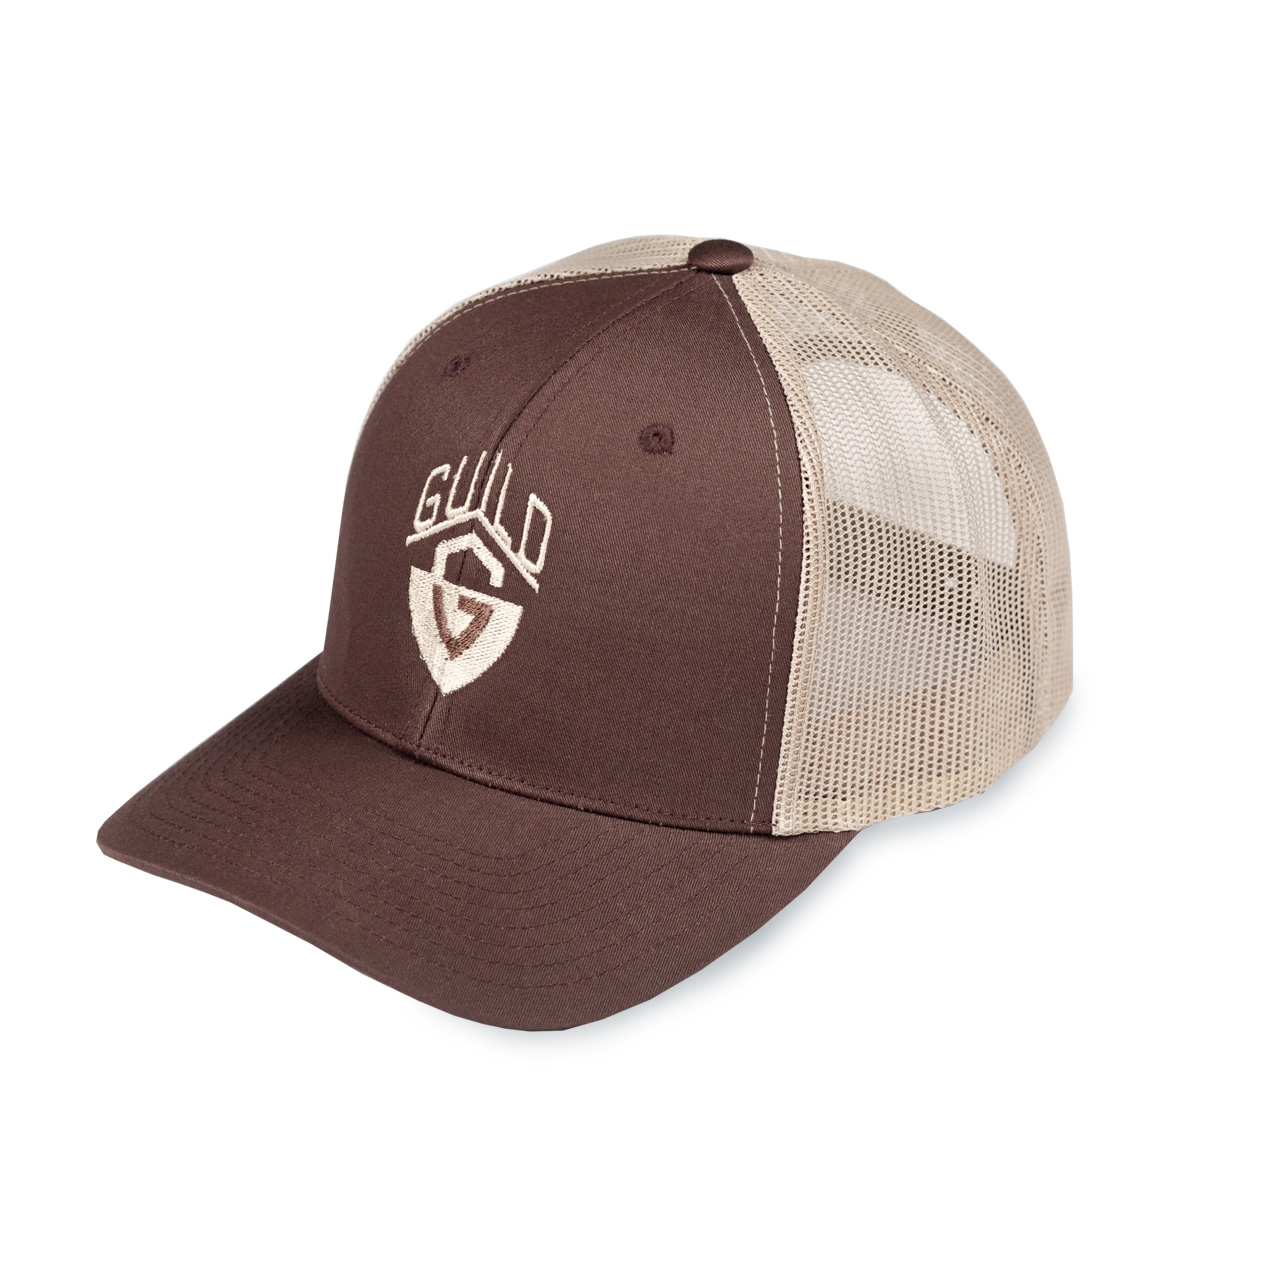 Guild Trucker Hat Khaki / Brown